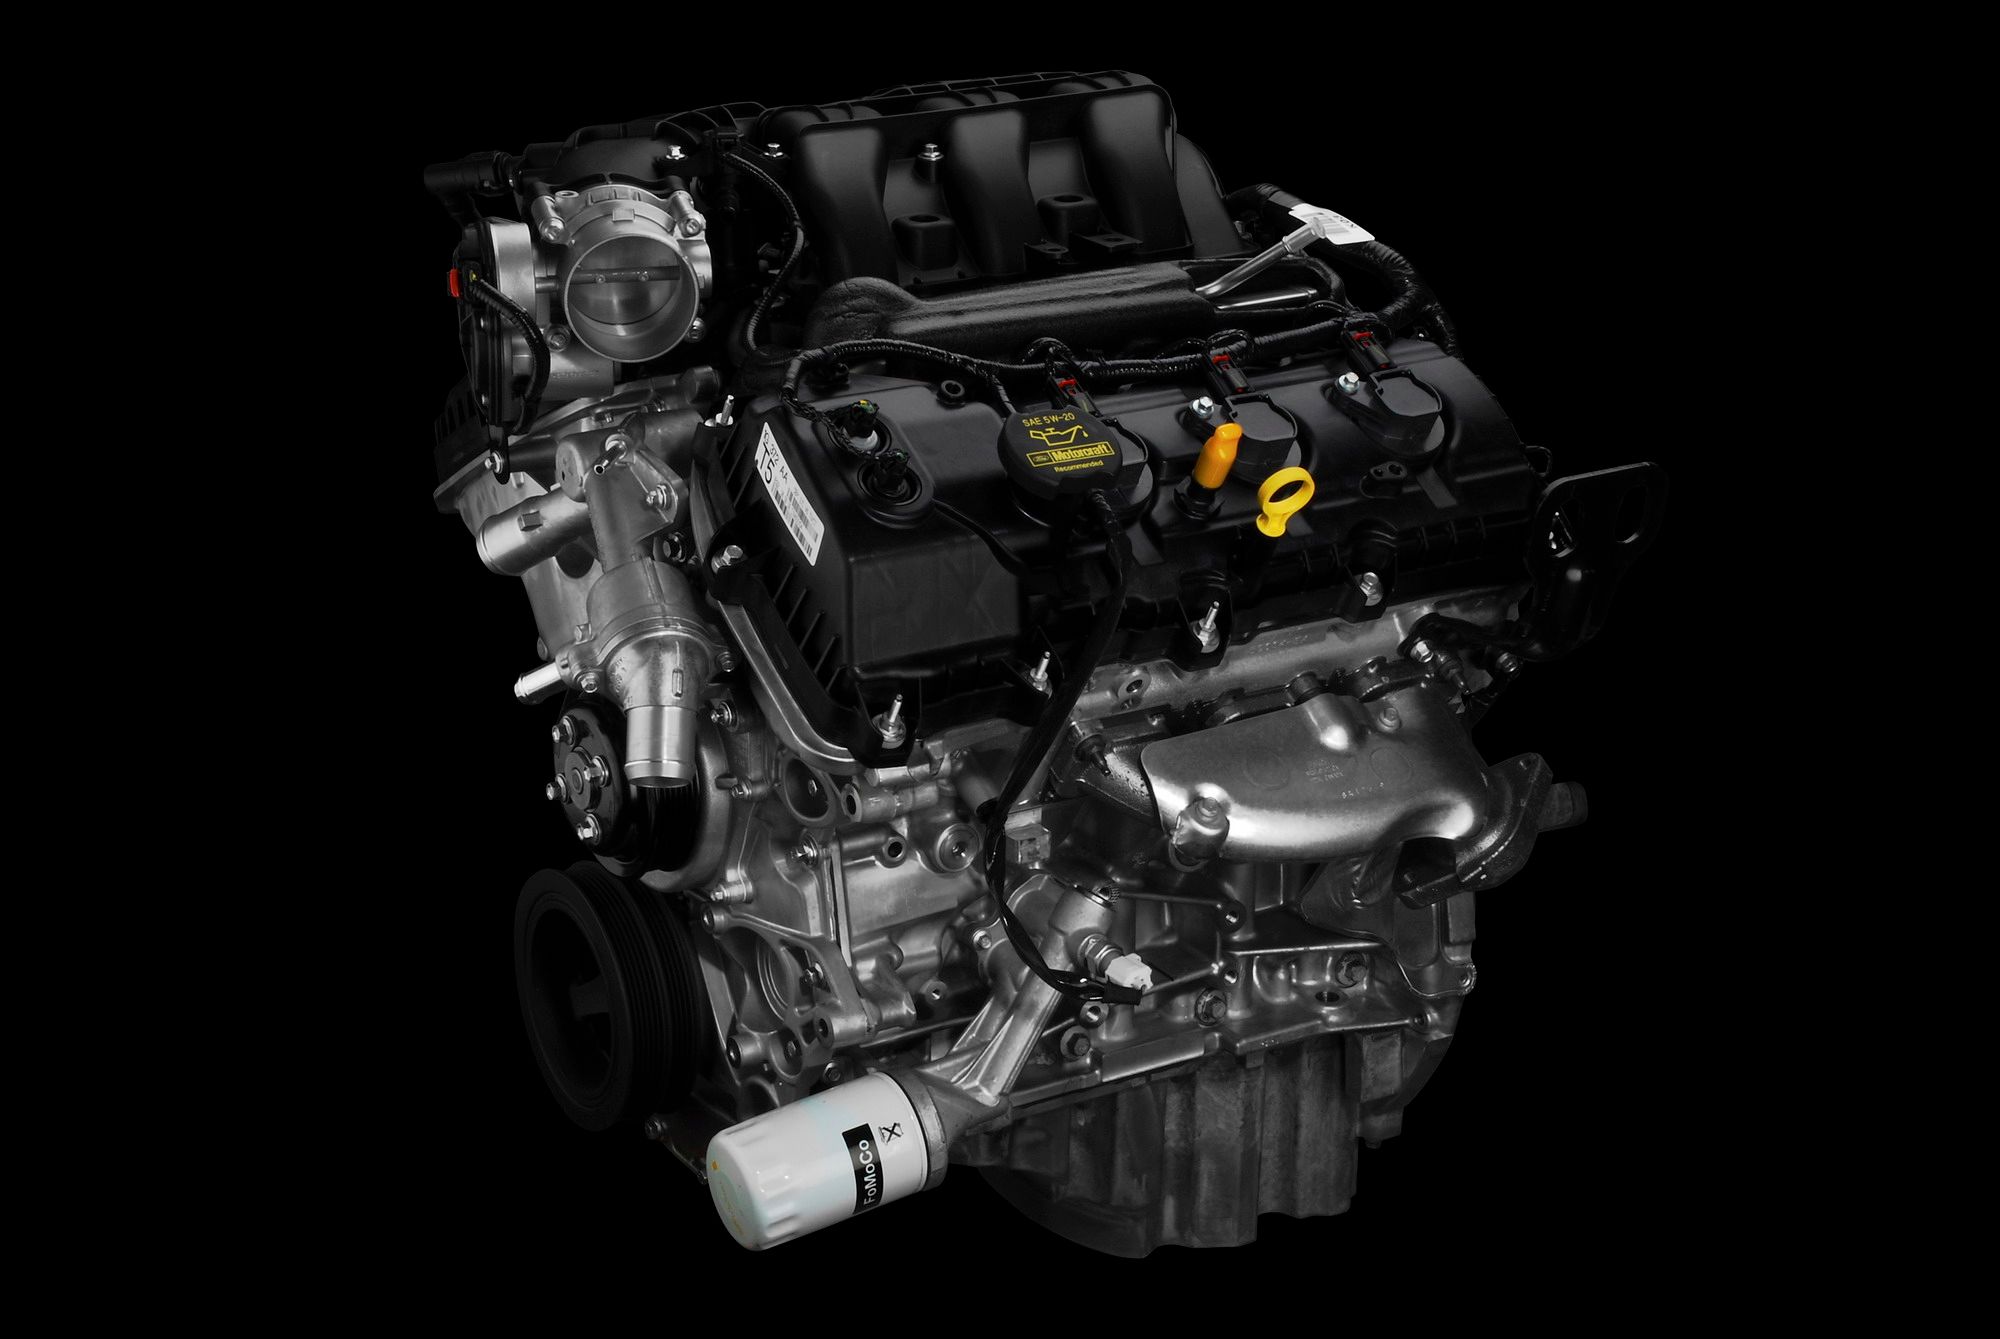 2011 Ford Mustang V6